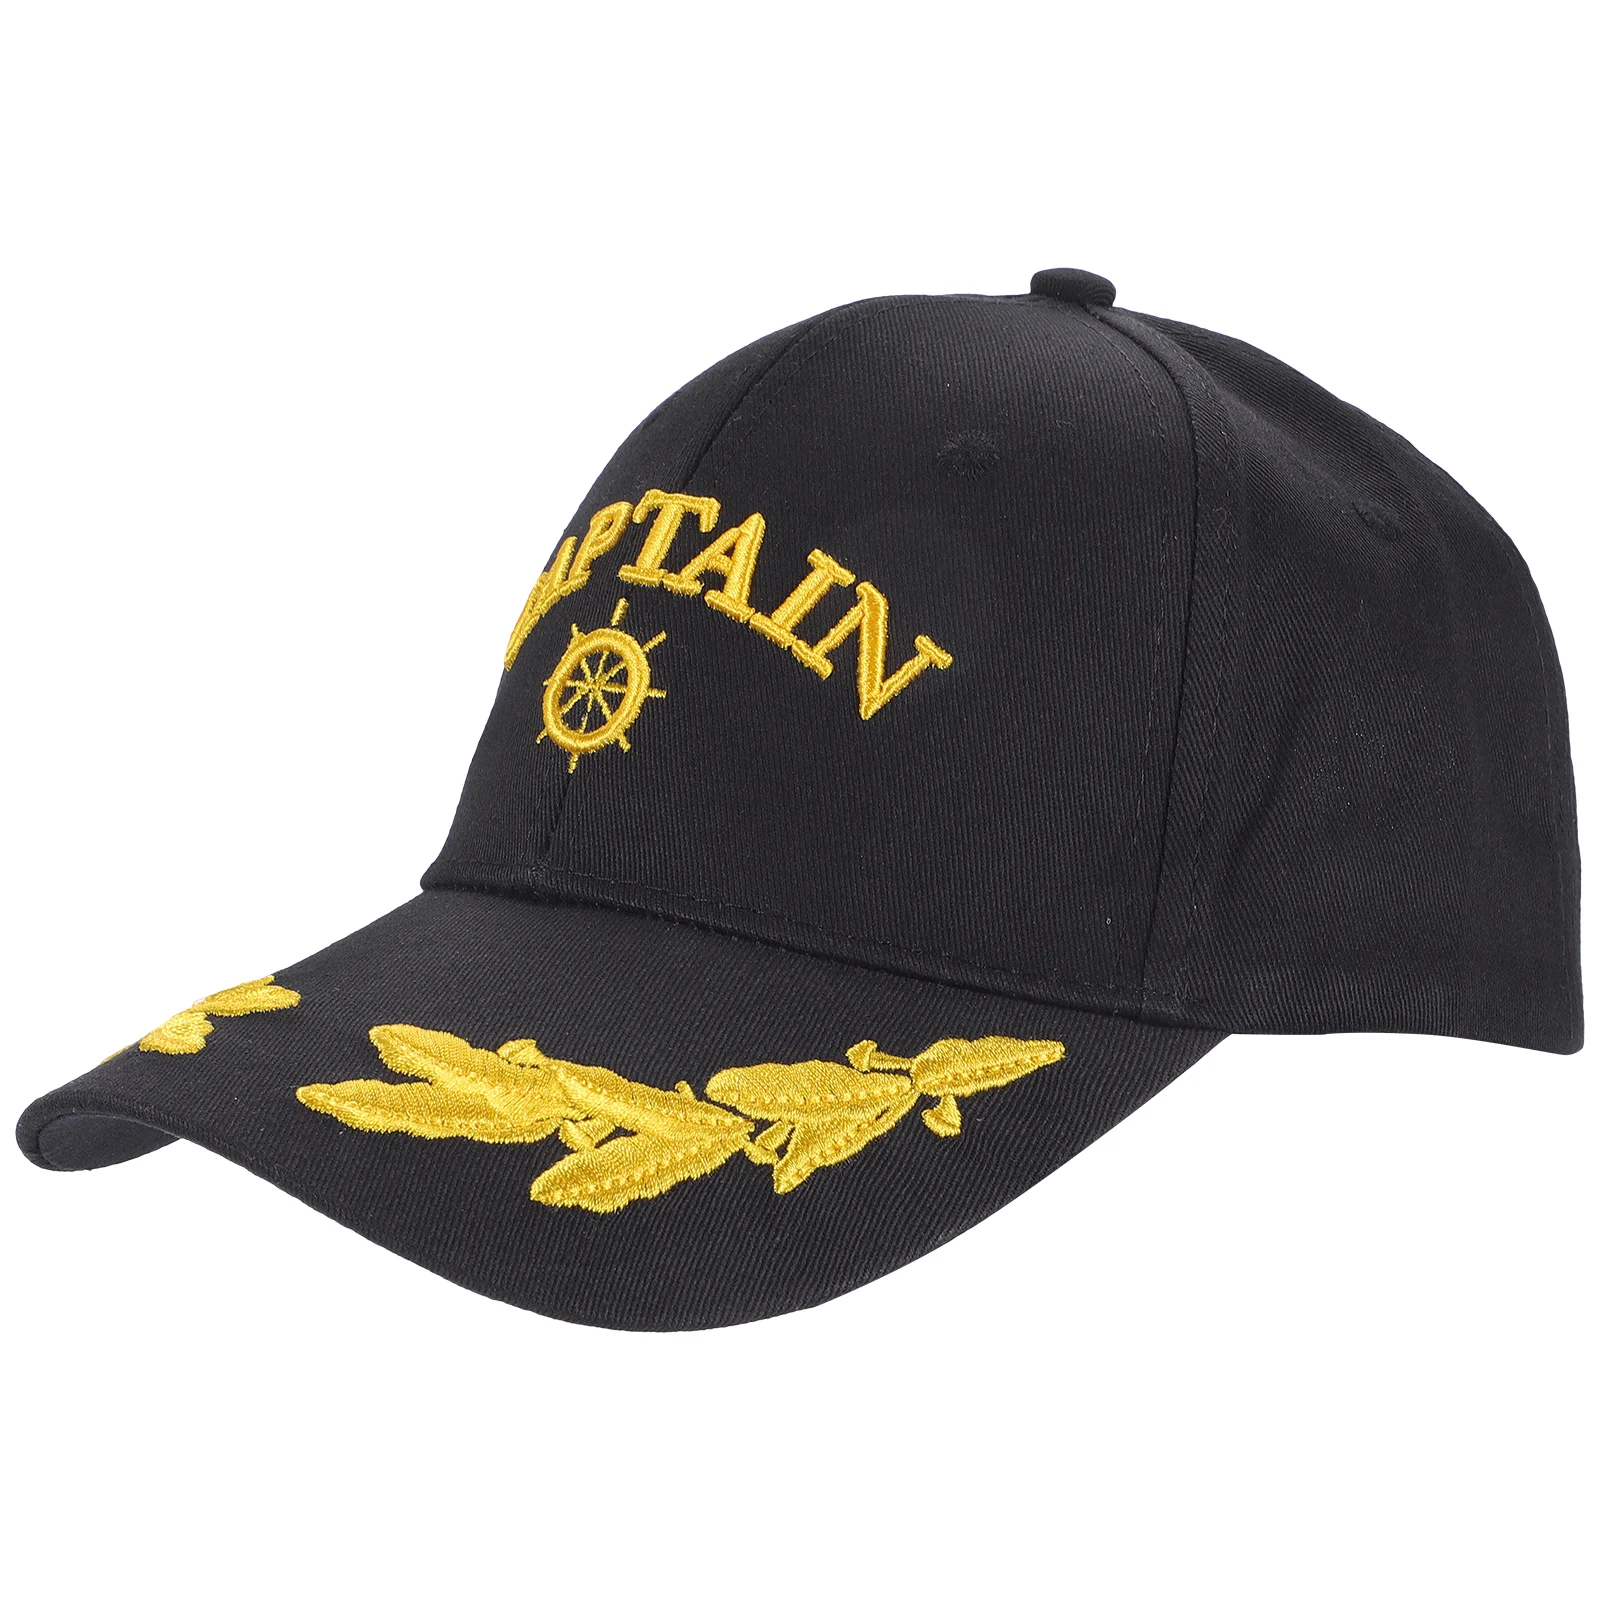 

Captain Hat Baseball Hats Men Sun Peaked Trendy Caps Women Adjustable Cotton Black Yacht